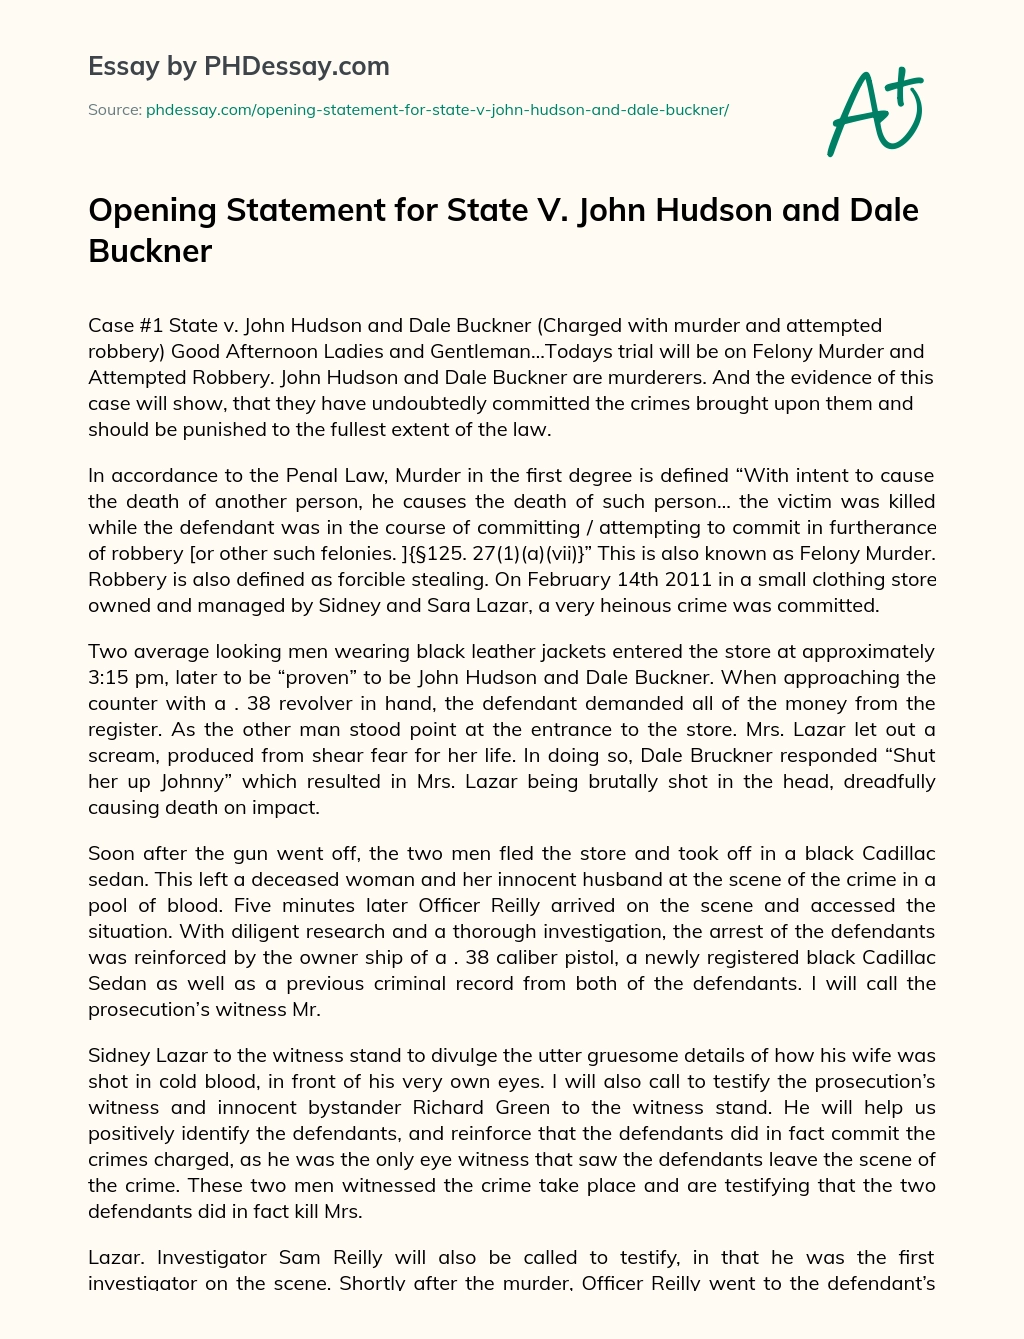 Opening Statement for State V. John Hudson and Dale Buckner essay